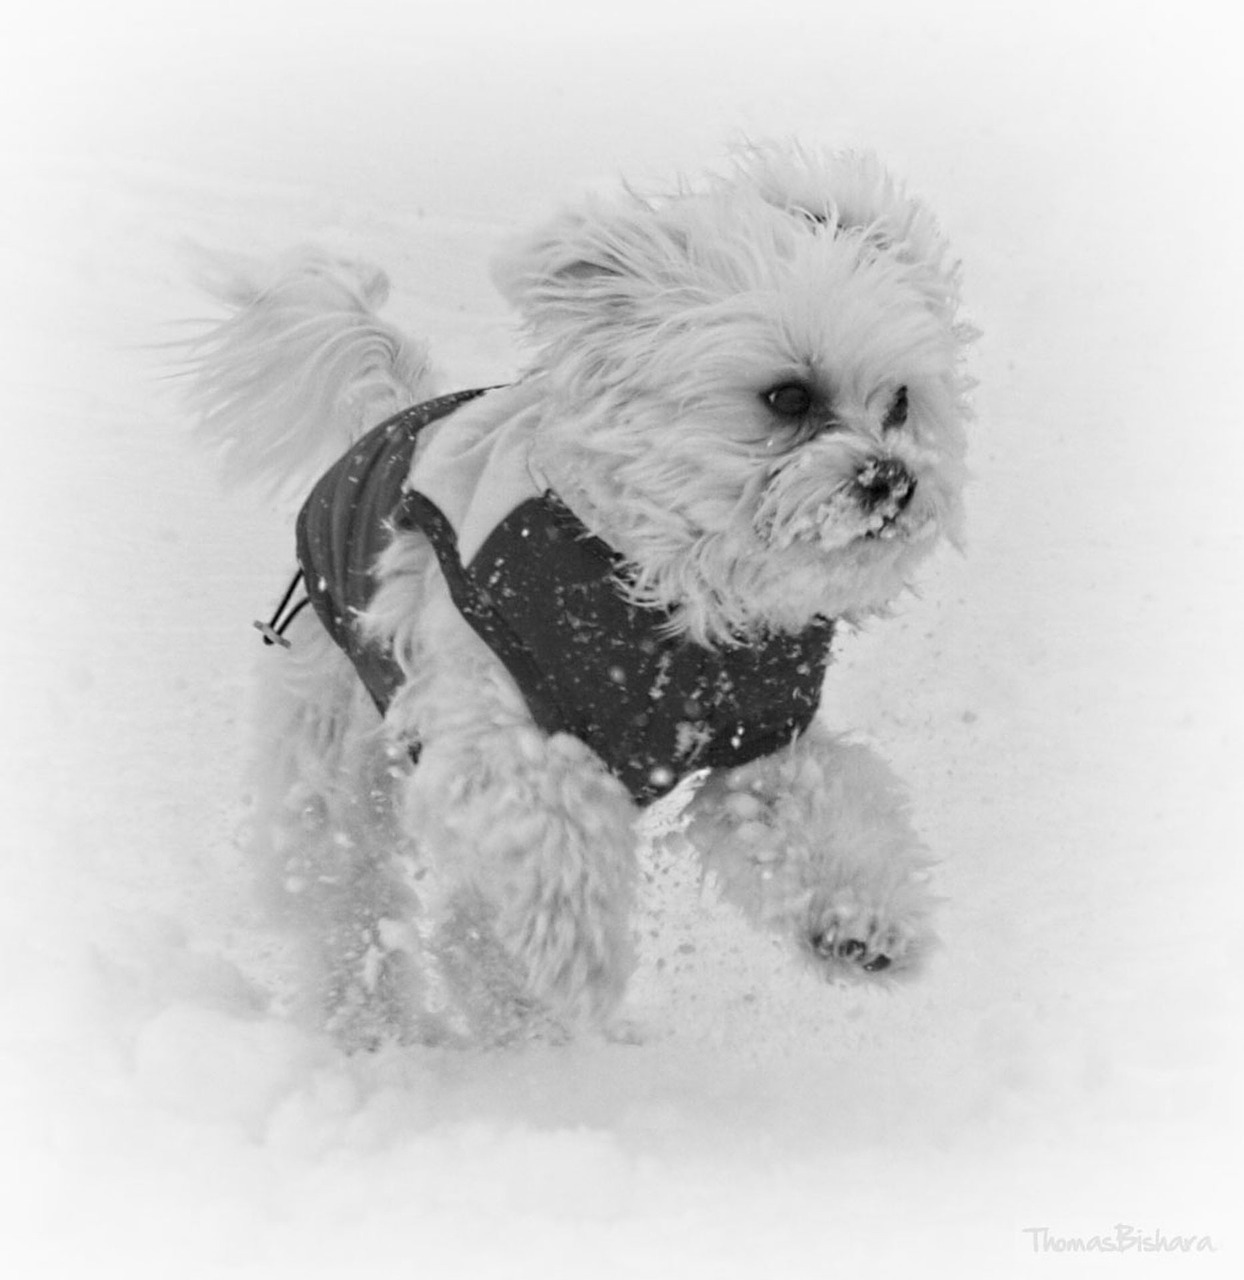 dog snow running free photo